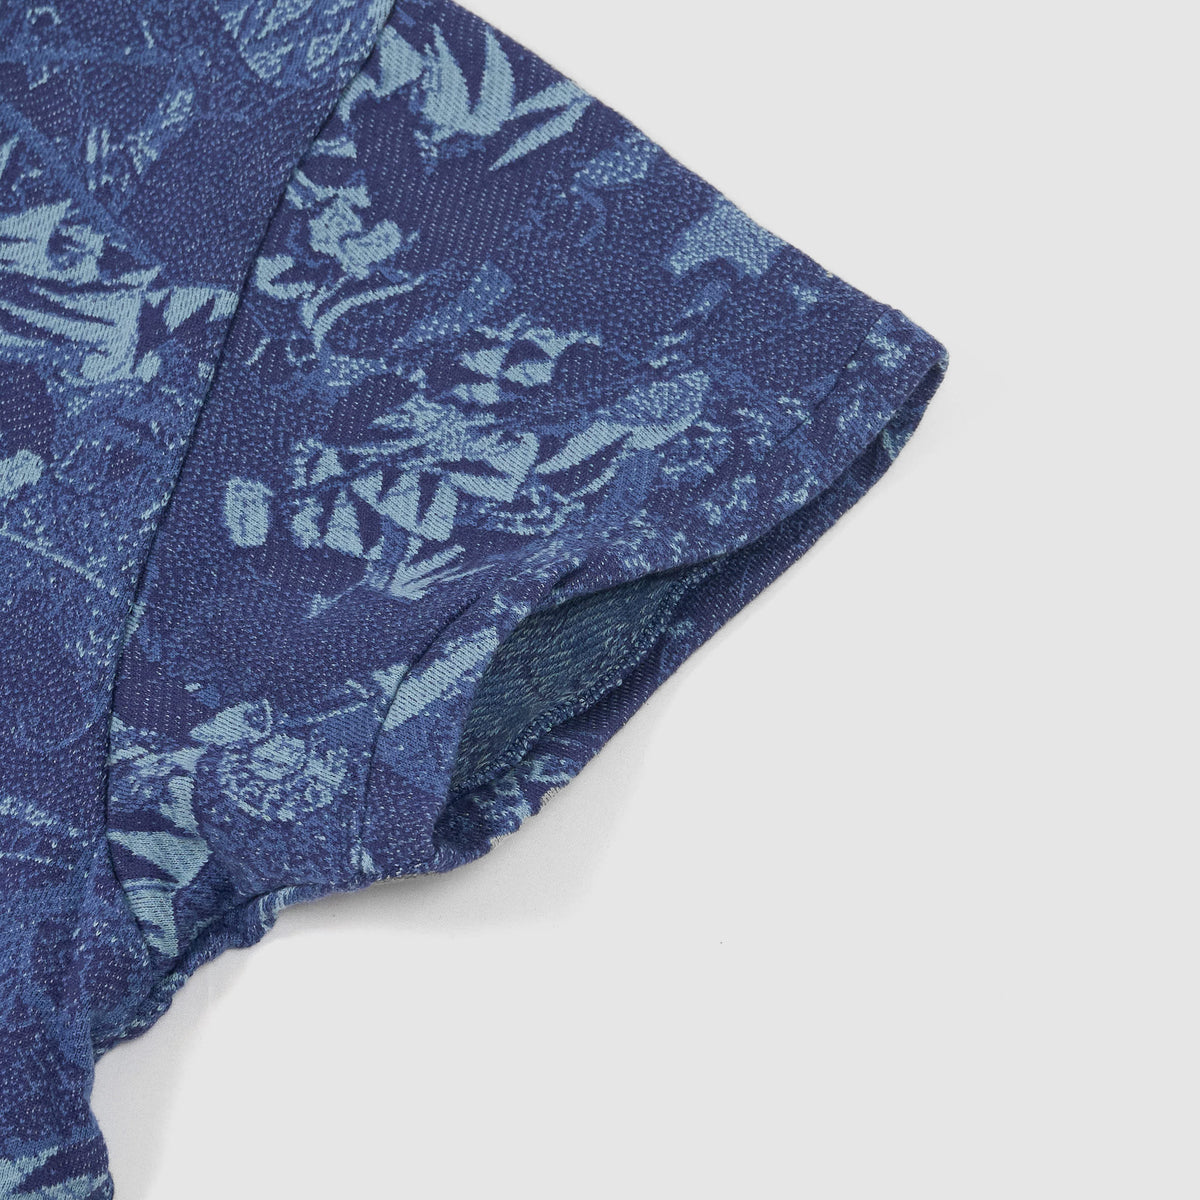 Samurai Jeans Short Sleeve Crew Neck 25th. Anniversary Jacquard Jersey Sweat T-Shirt